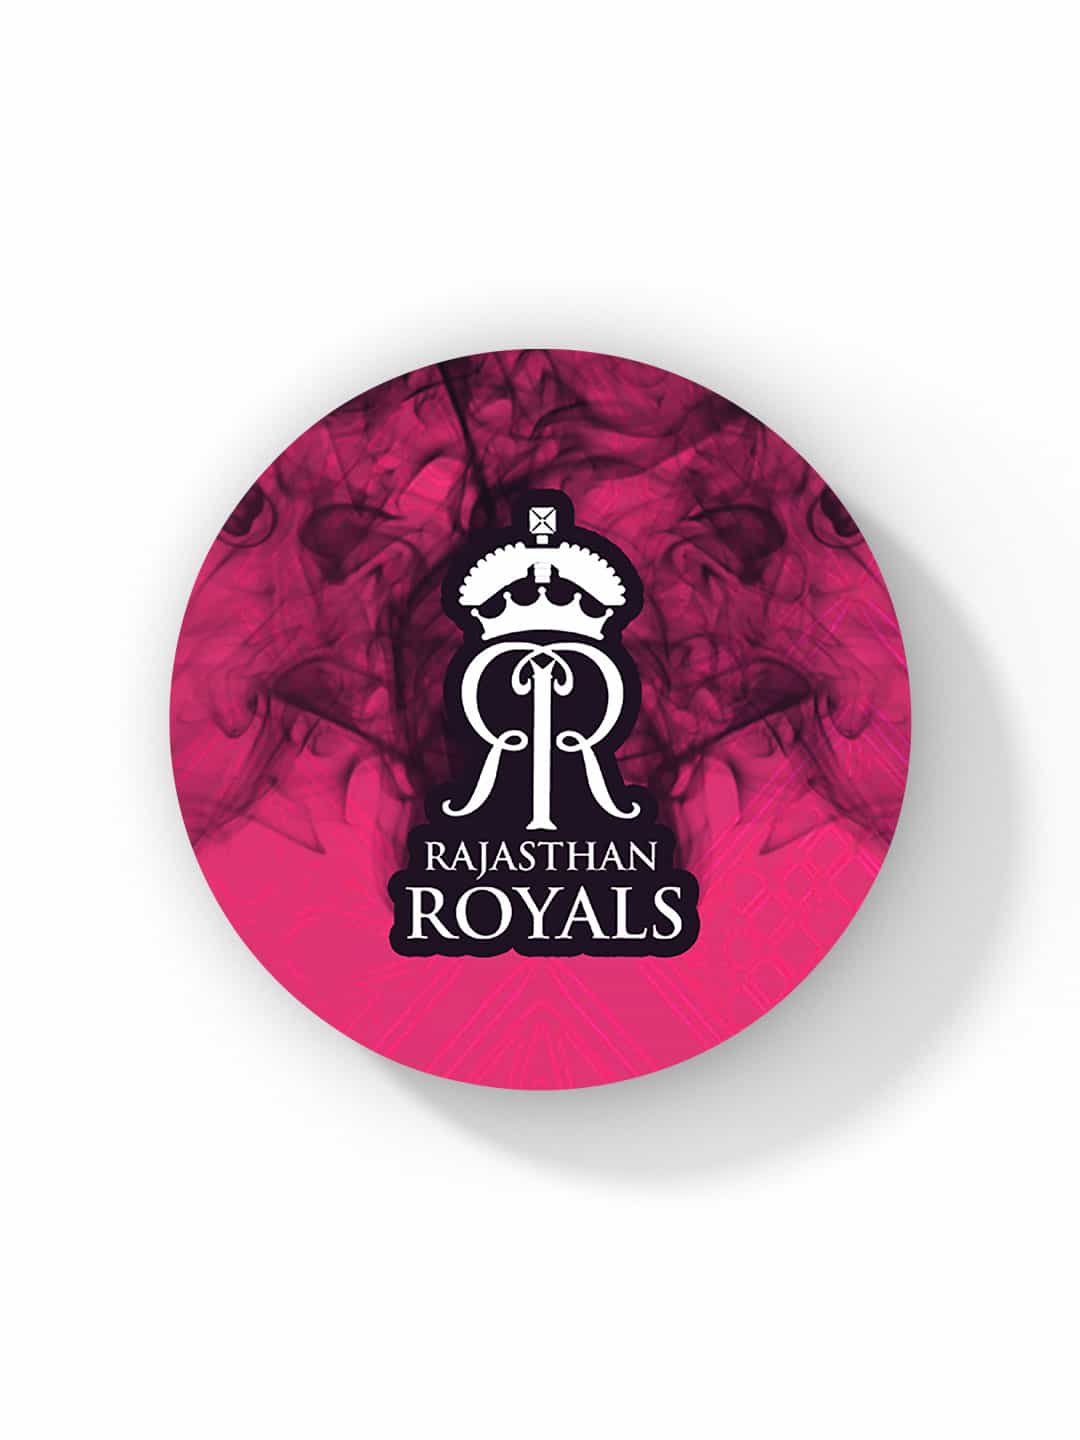 Rajasthan Royals 2018 Indian Premier League Kings XI Punjab 2008 Indian  Premier League Mumbai Indians, royal logo, label, text png | PNGEgg